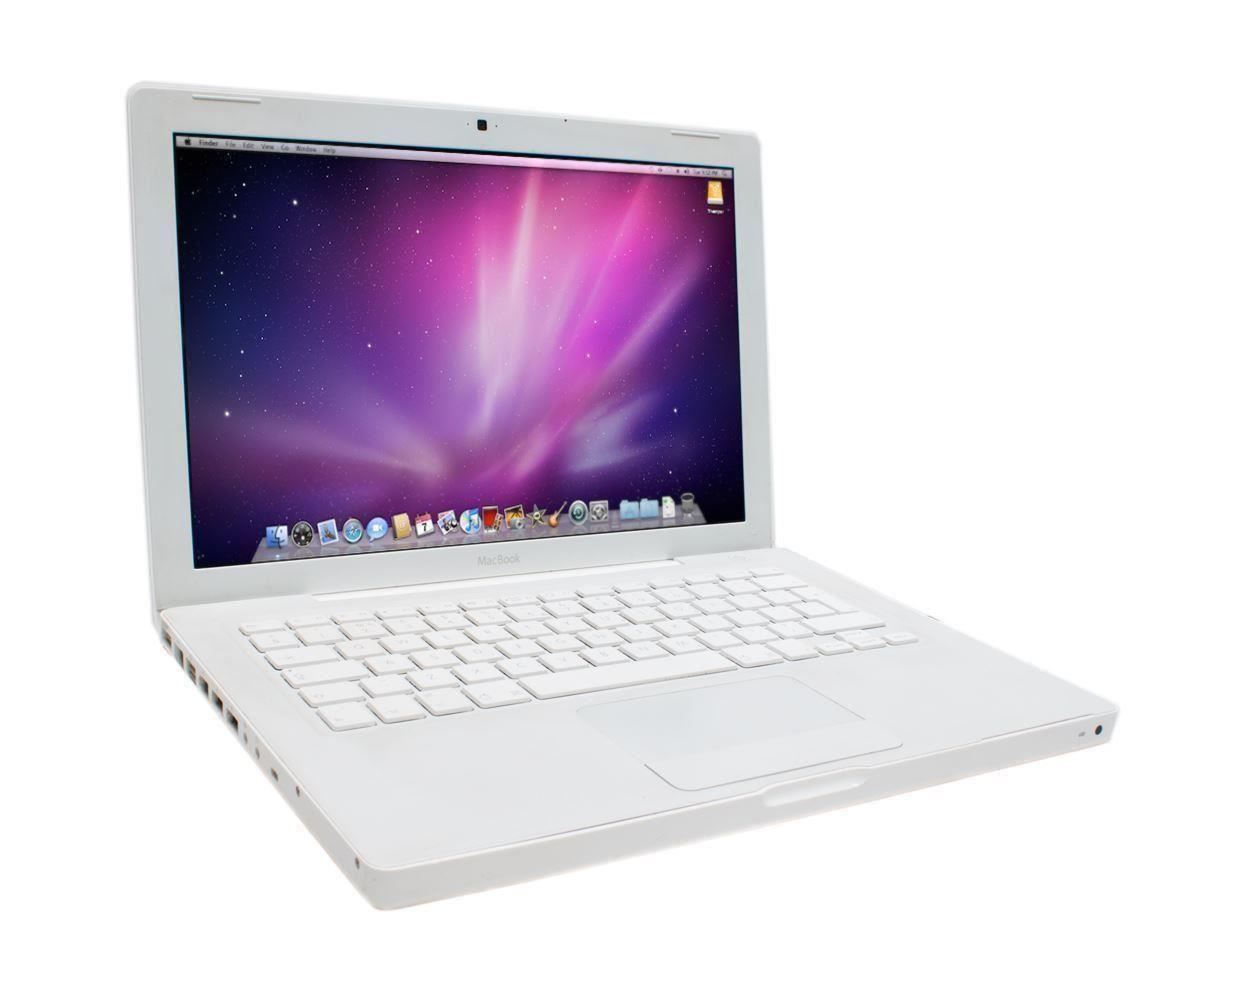 macbook pro 2011 macos versions